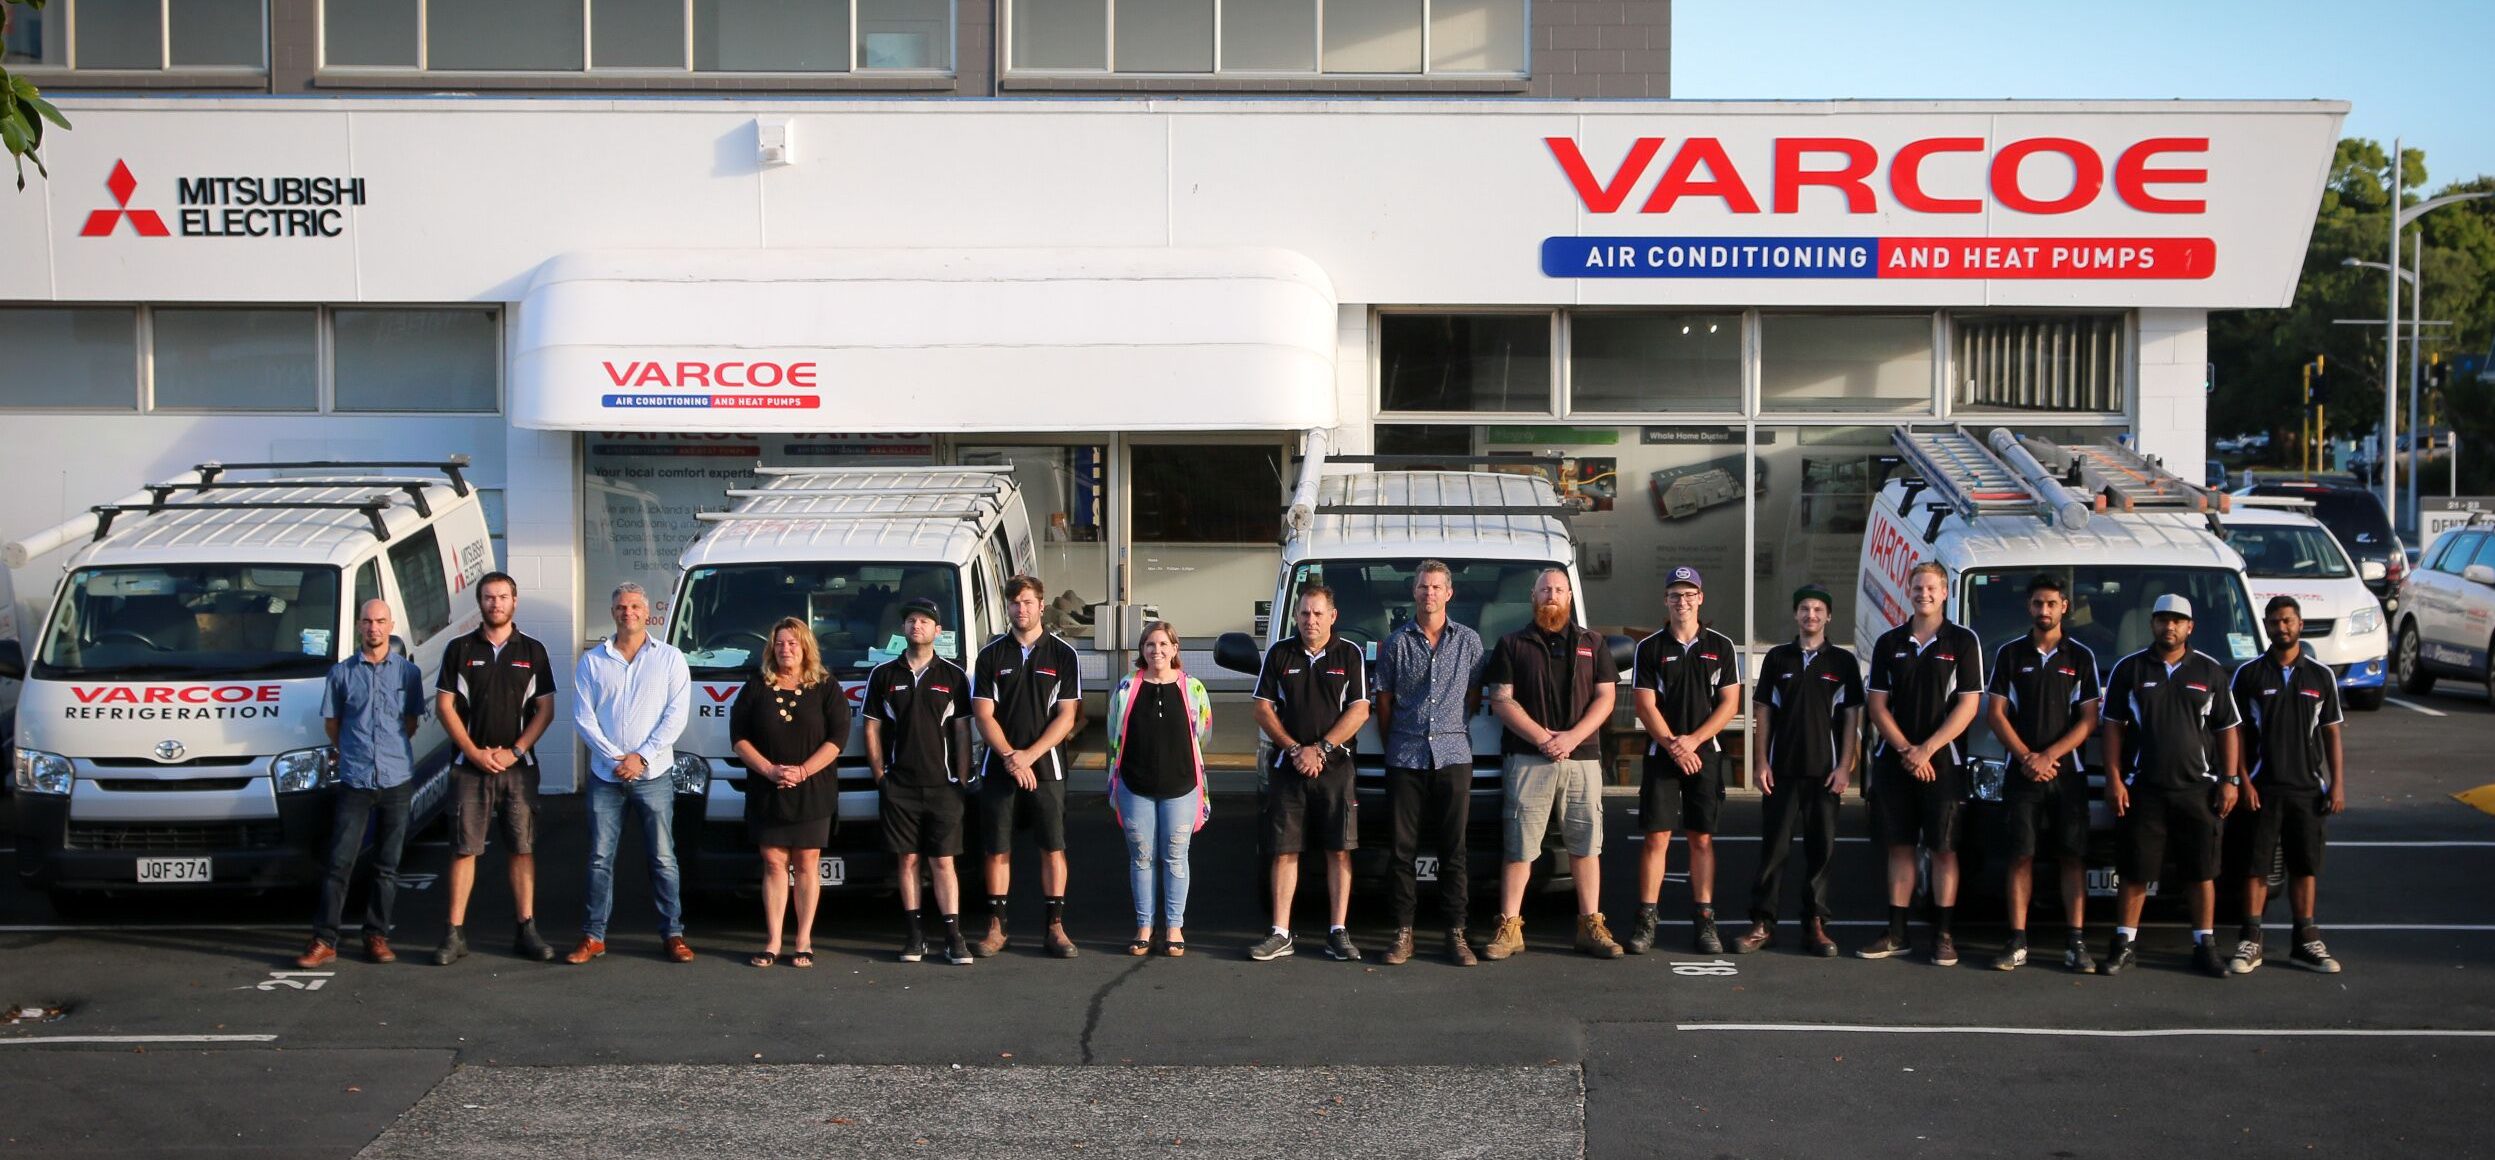 Varcoe staff and team memebrs standing otuside of their workplace with varcoe branding